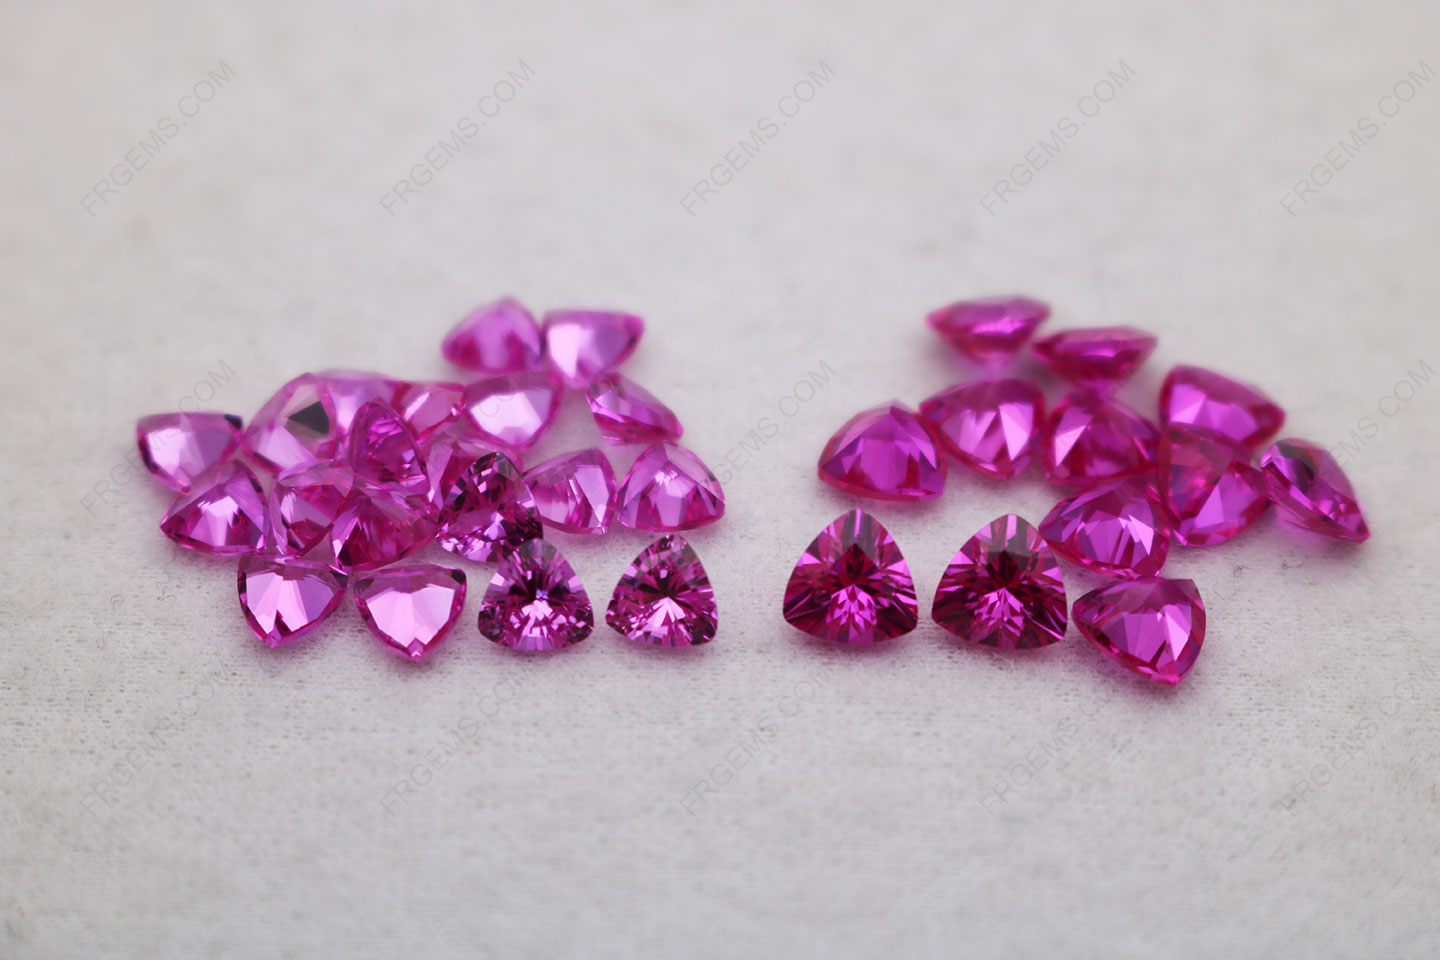 Loose Synthetic Corundum Rose Pink Sapphire #3 Trillion Shape Faceted Cut gemstones